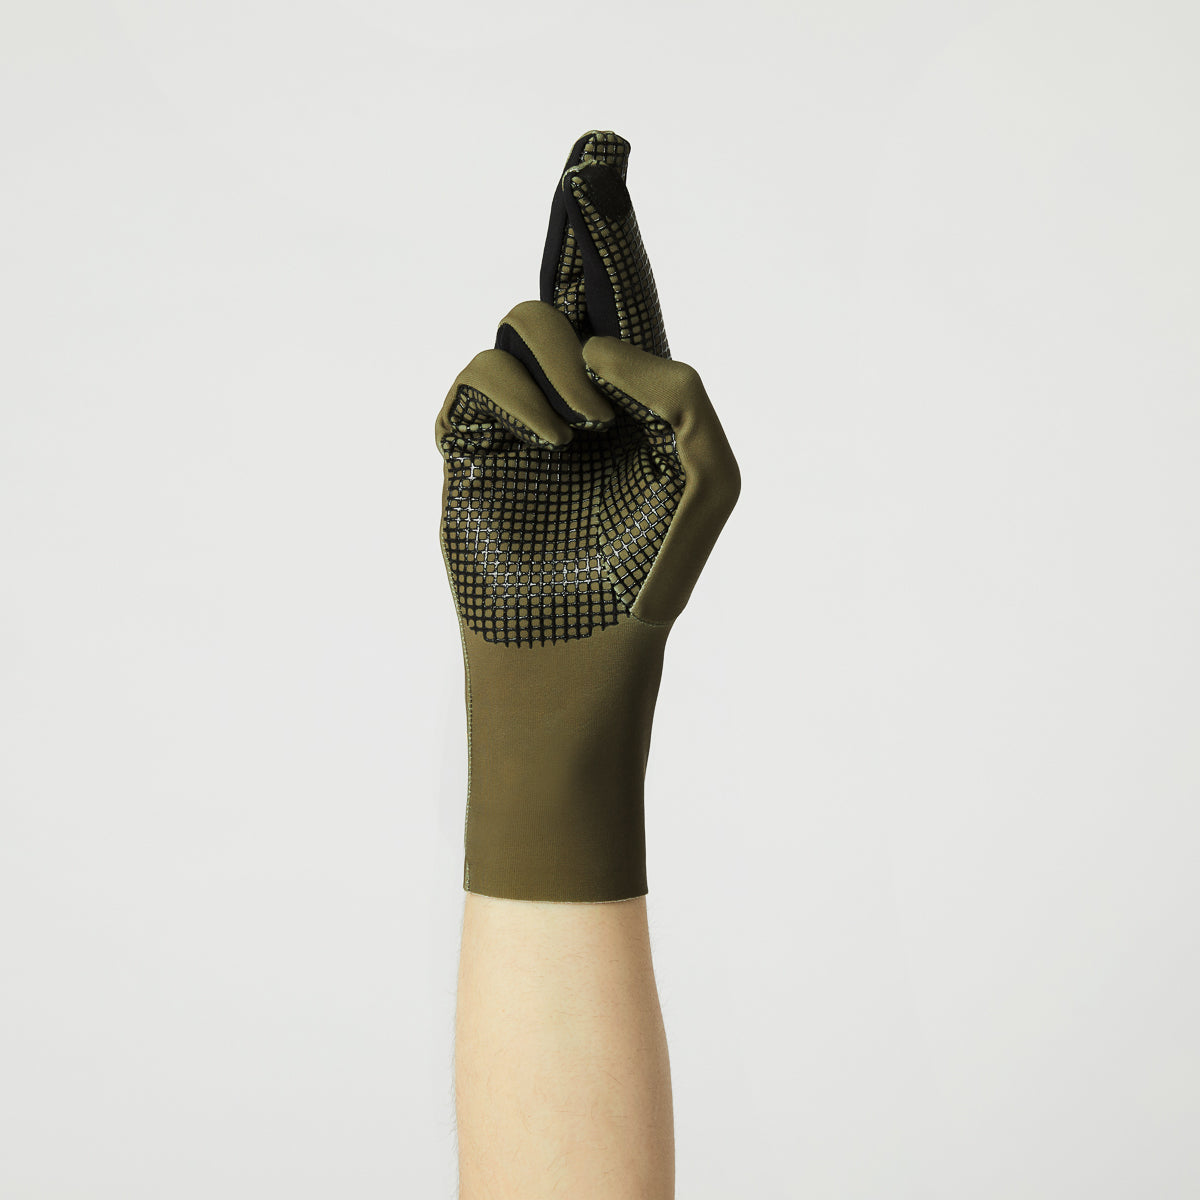 Midseason Gloves - Olive